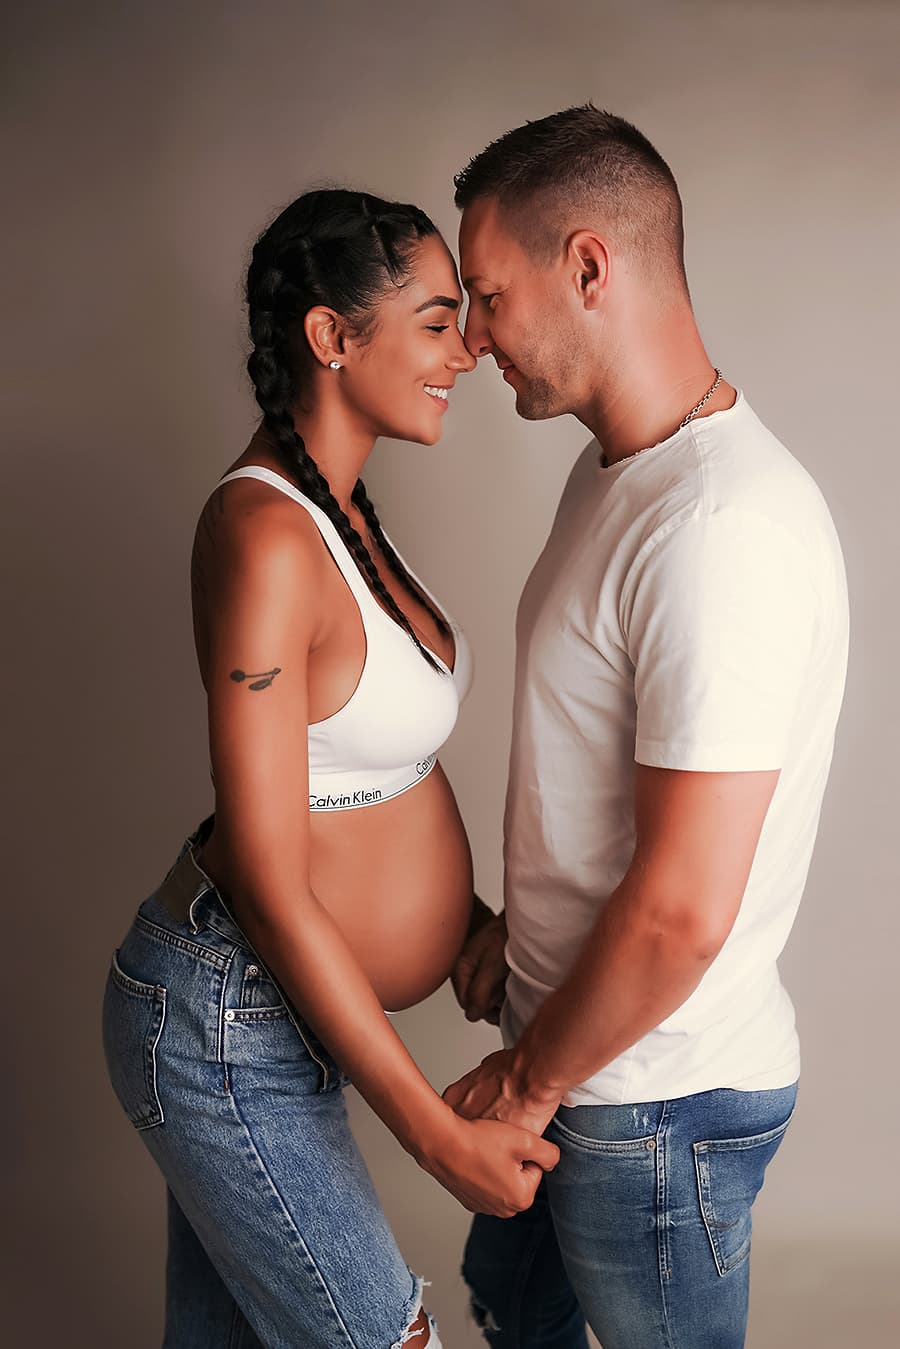 Schwangerschaft Fotoshooting mit Partner